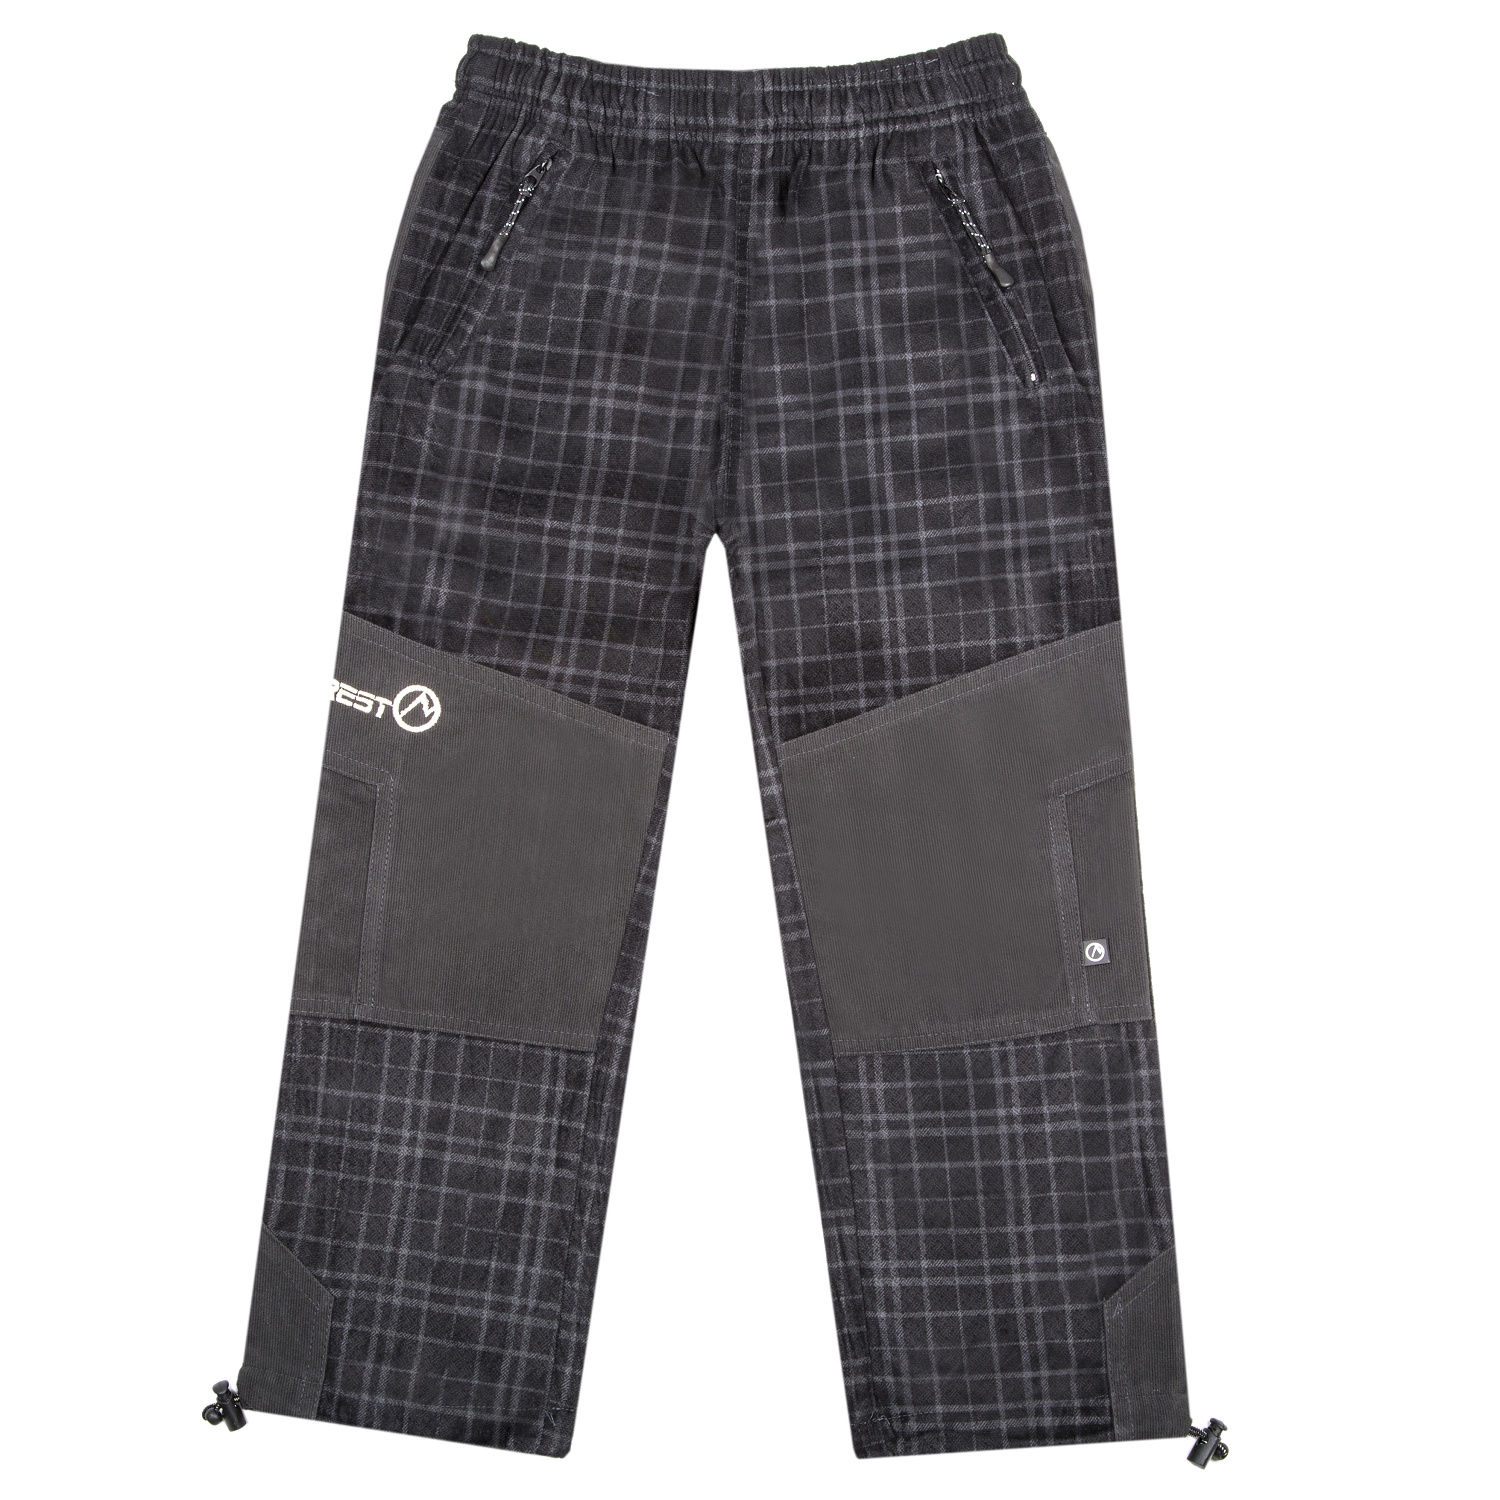 Chlapecké outdoorové kalhoty - NEVEREST F-922cc, šedá Barva: Šedá, Velikost: 104